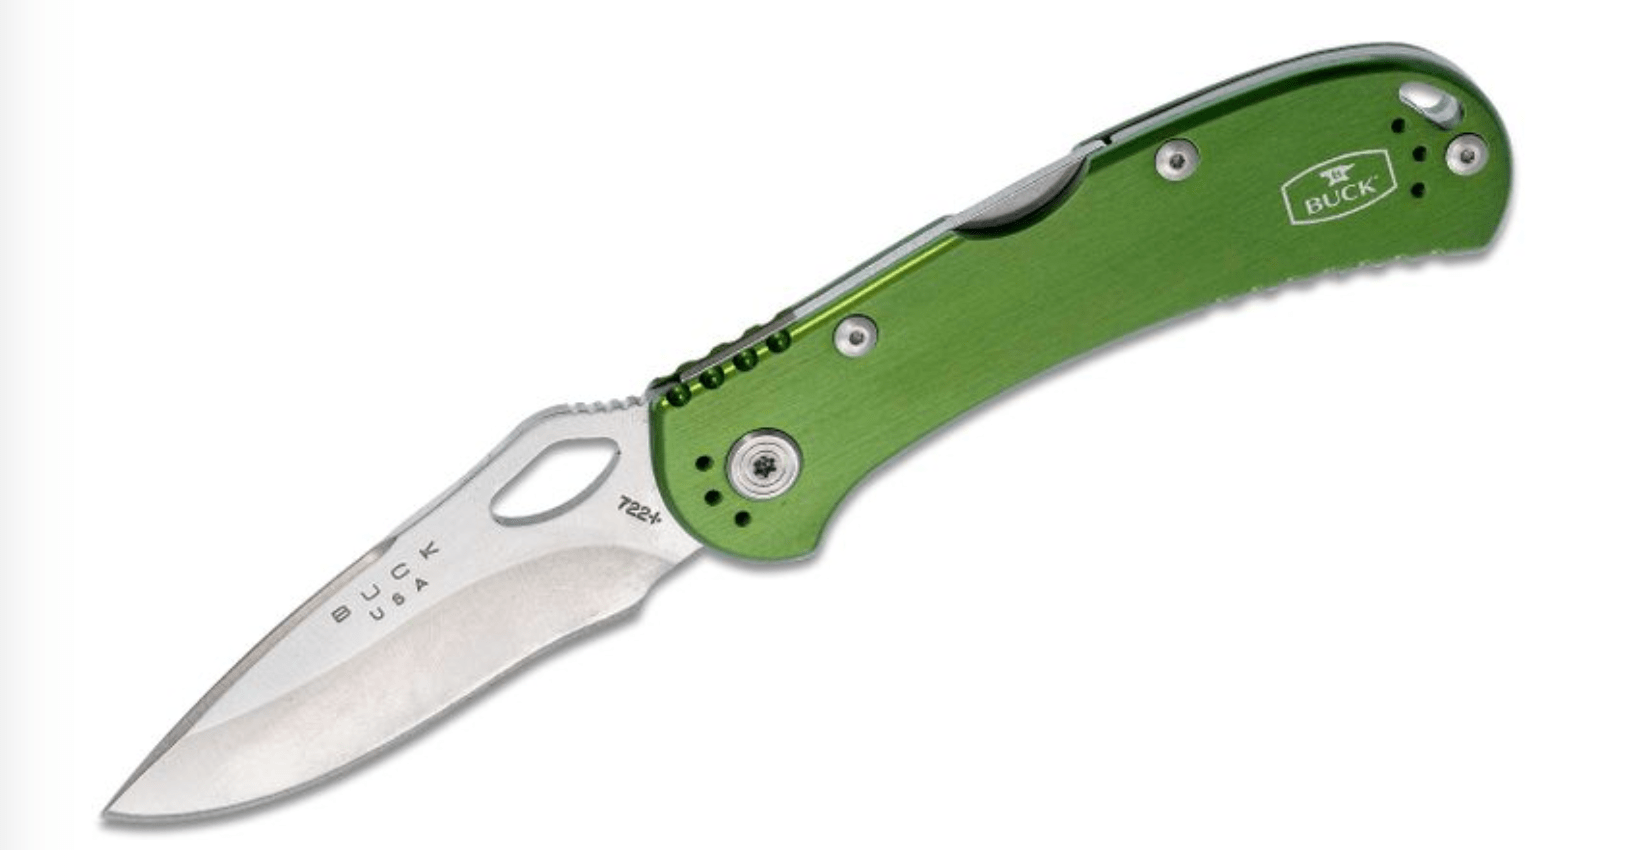 Buck Knife Blade: 8 cm (19 cm) / Green Buck 722 Spitfire Folding Knife